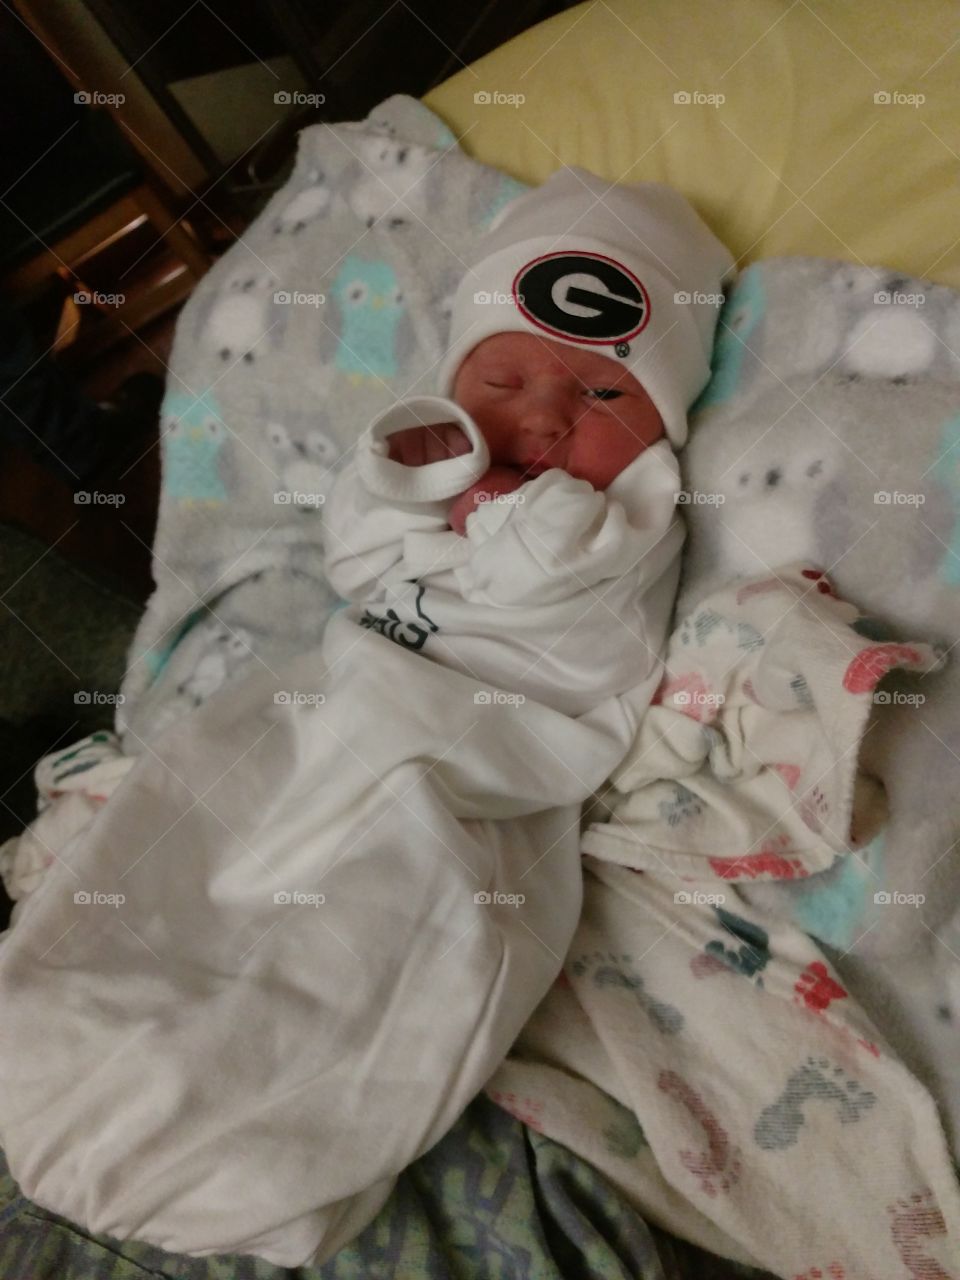 baby girl, our newest addition already a Georgia Fan! go Dawgs!! 
baby love